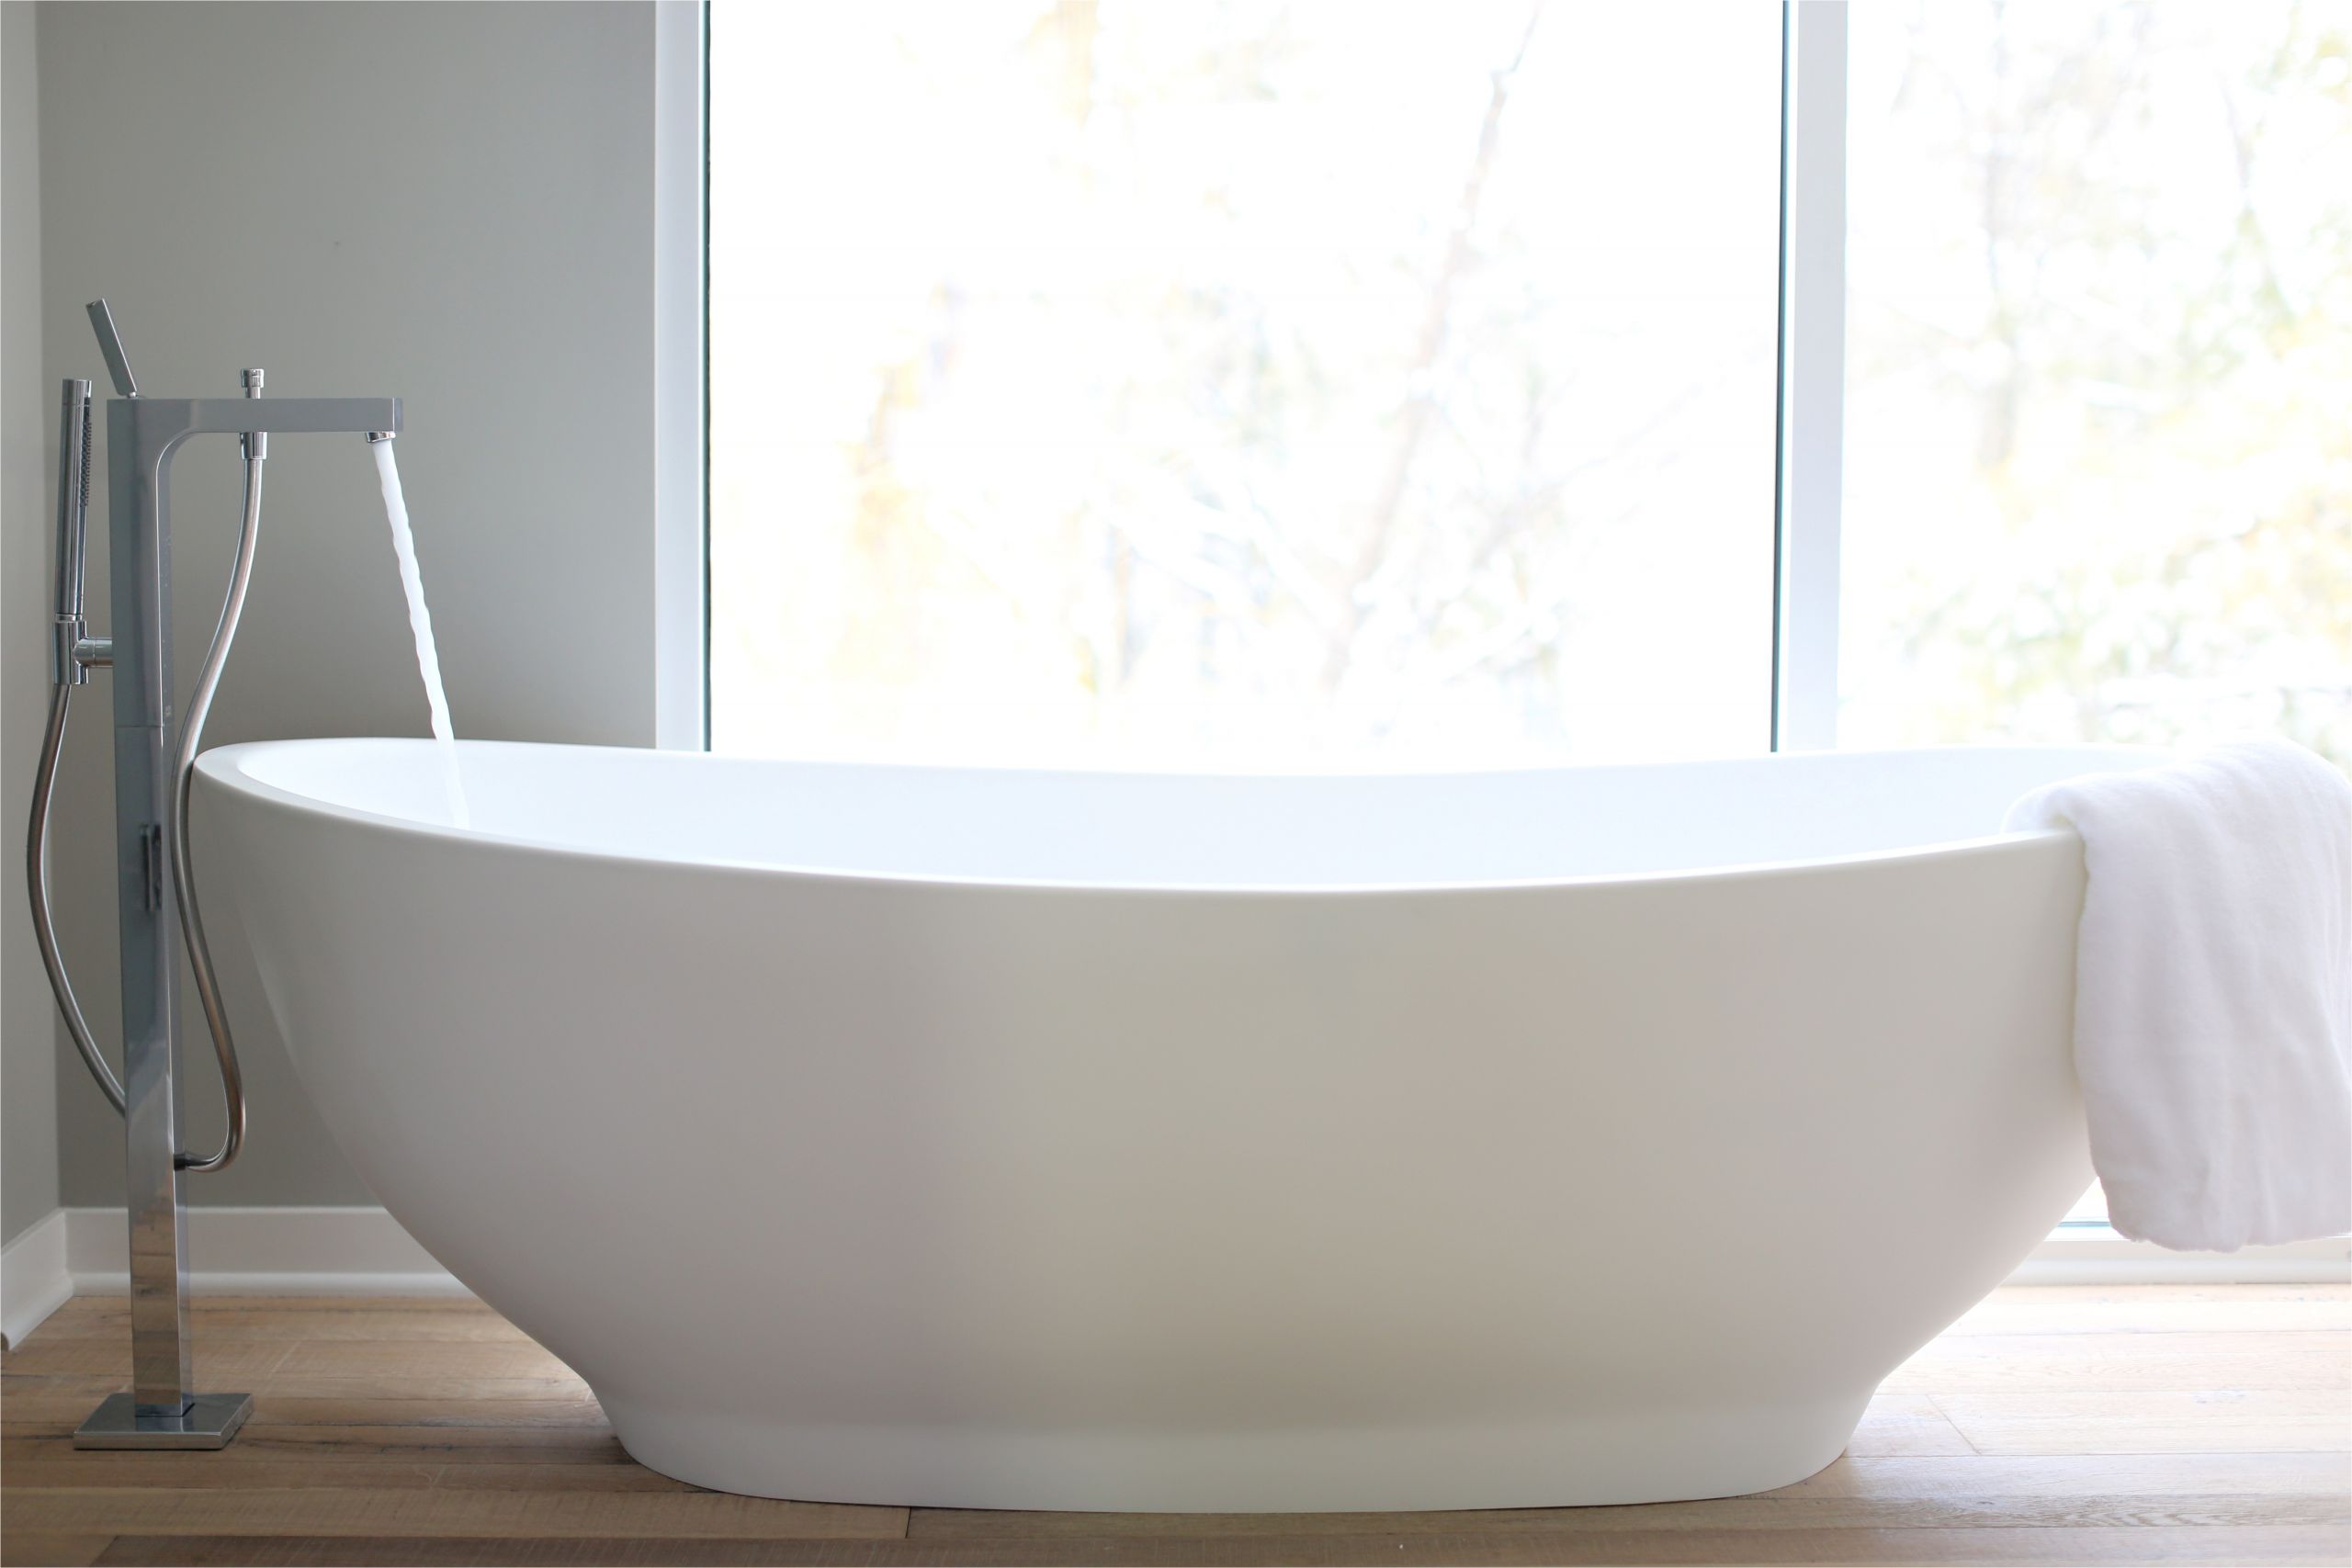 add hot air massage to your luxury bathtub